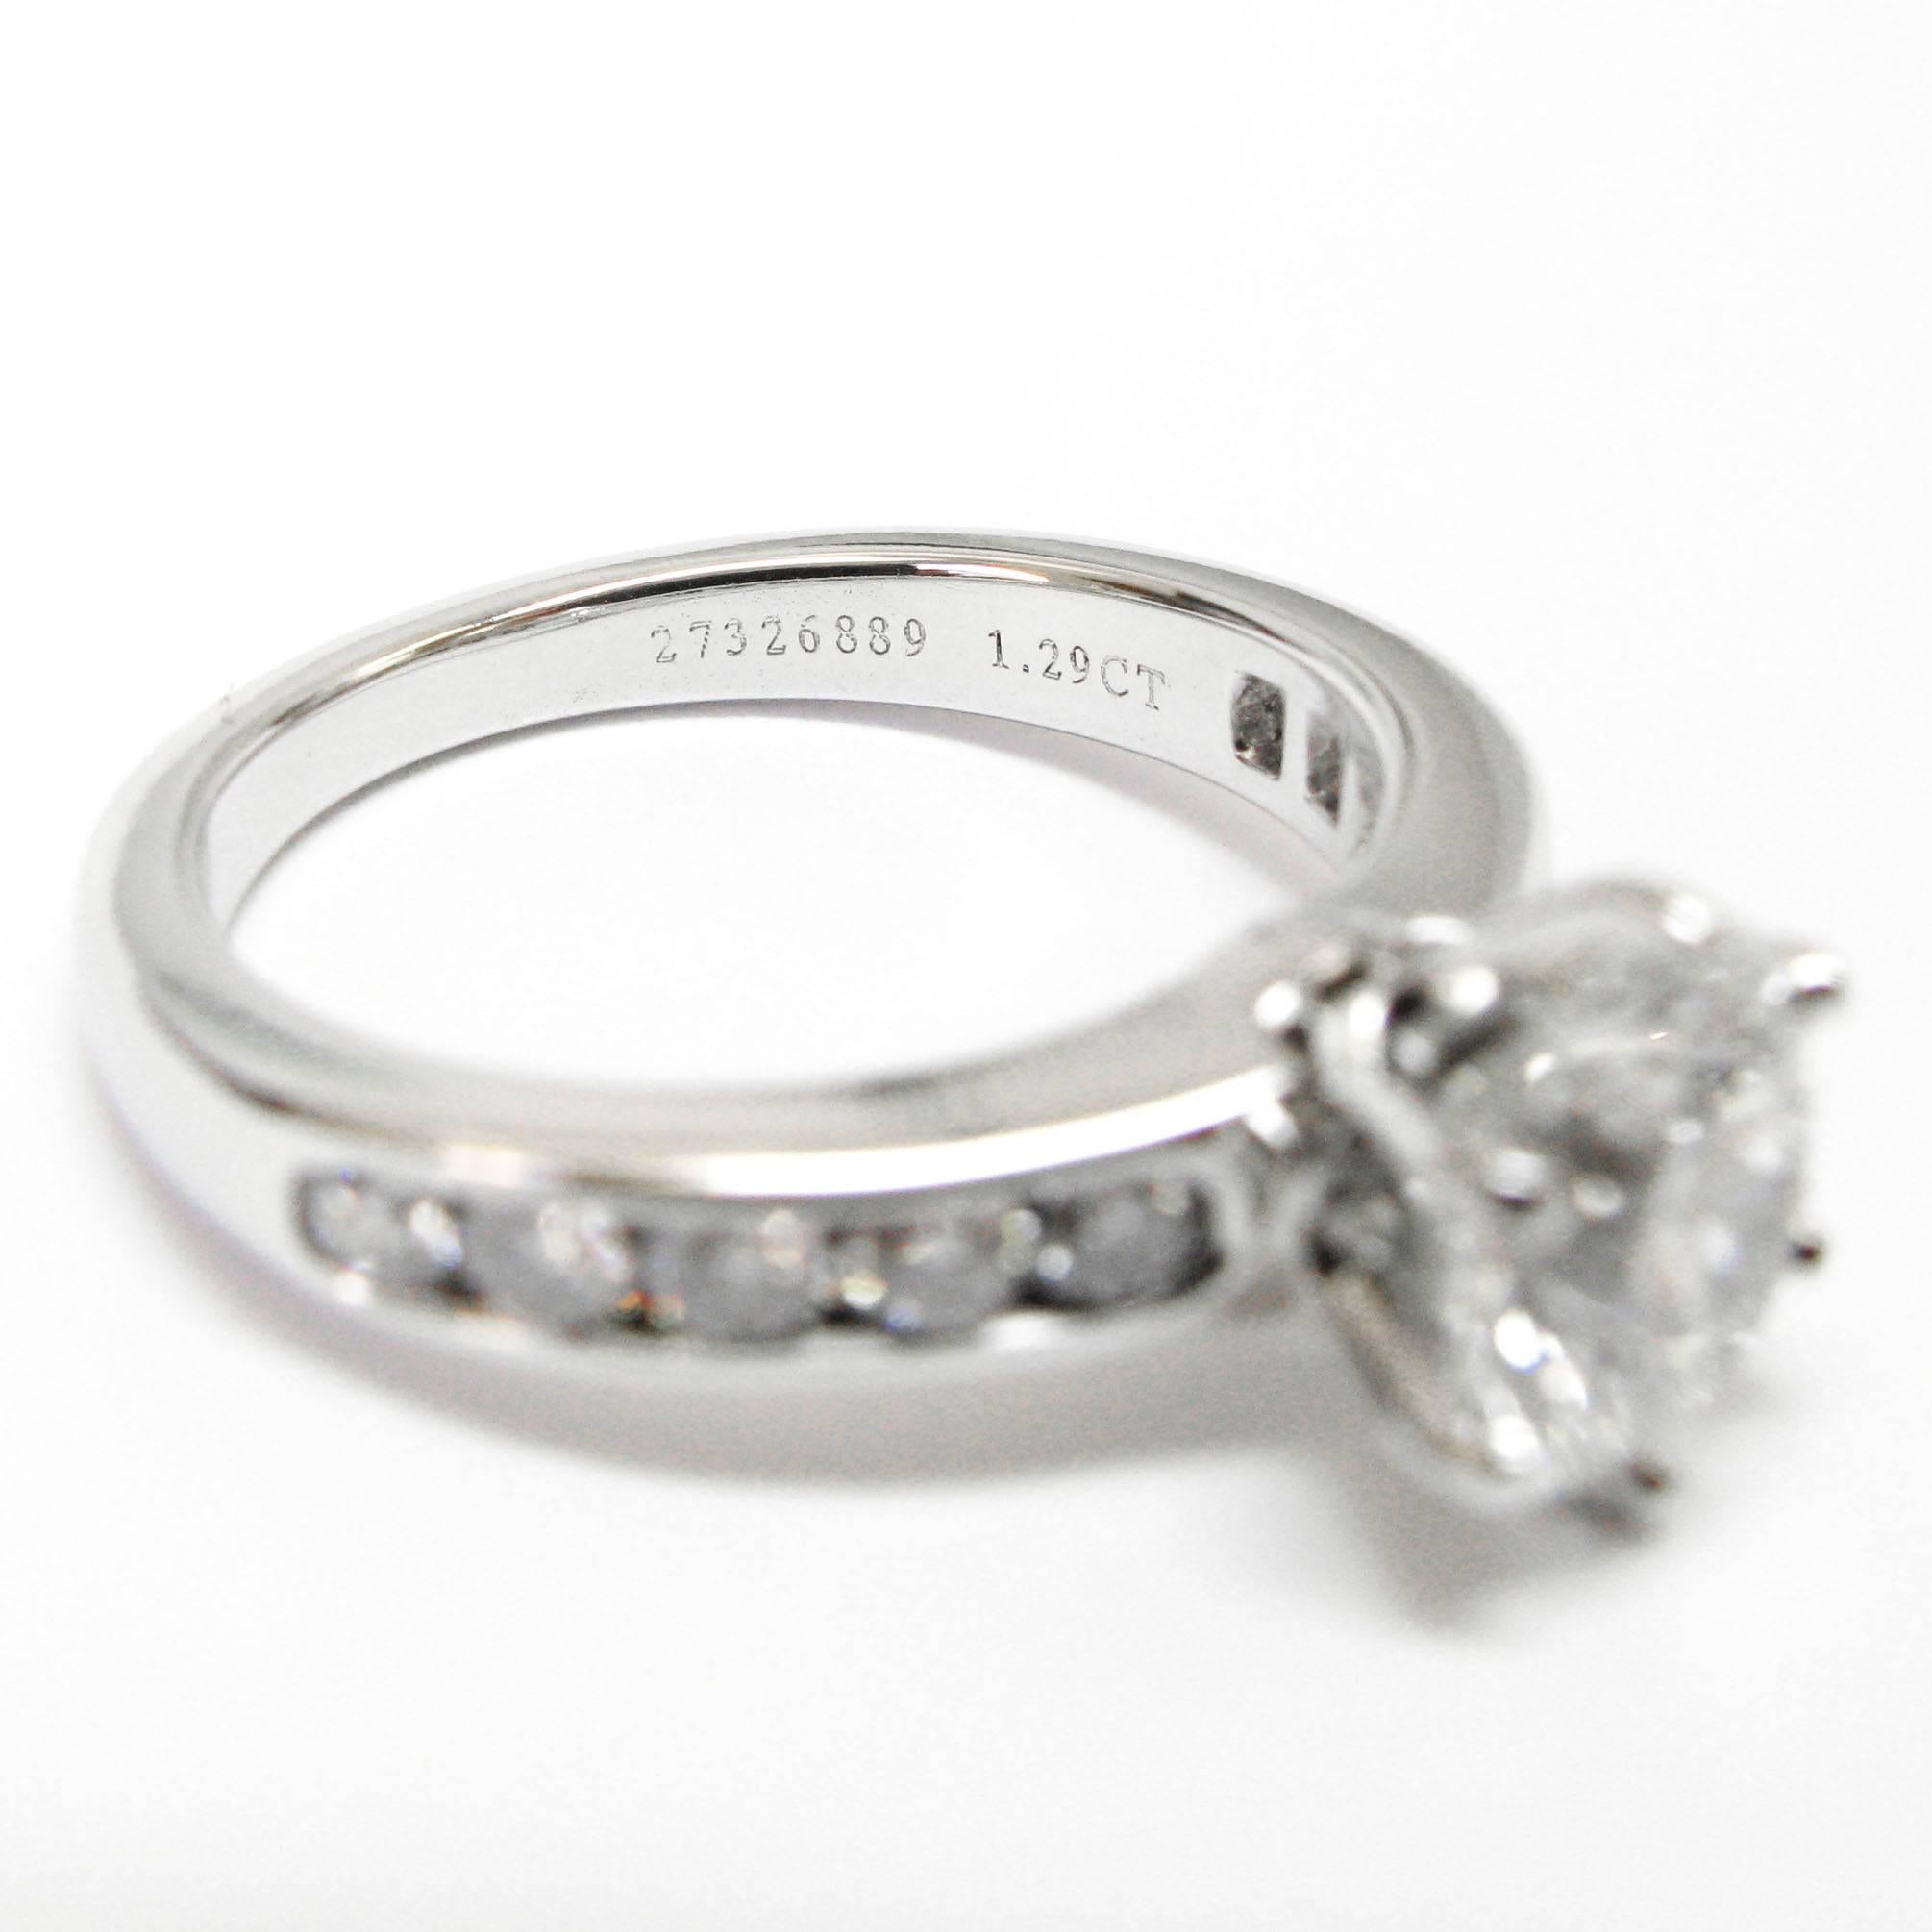 1.29 carat diamond ring